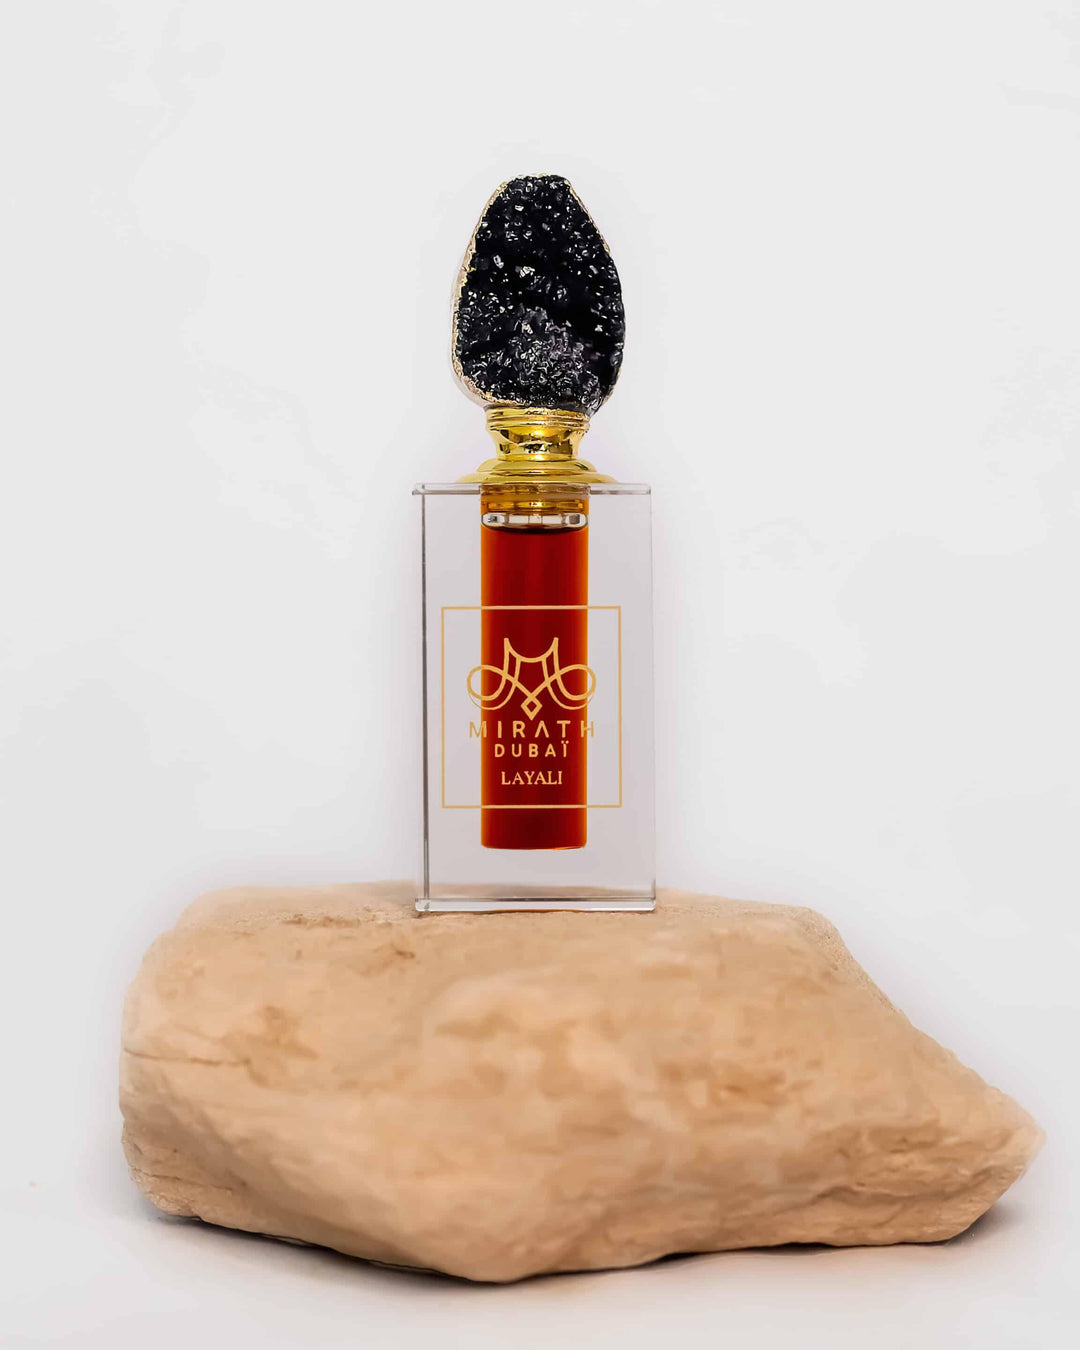 Mirath Dubai Perfume Oil Layali - The Harmony Store